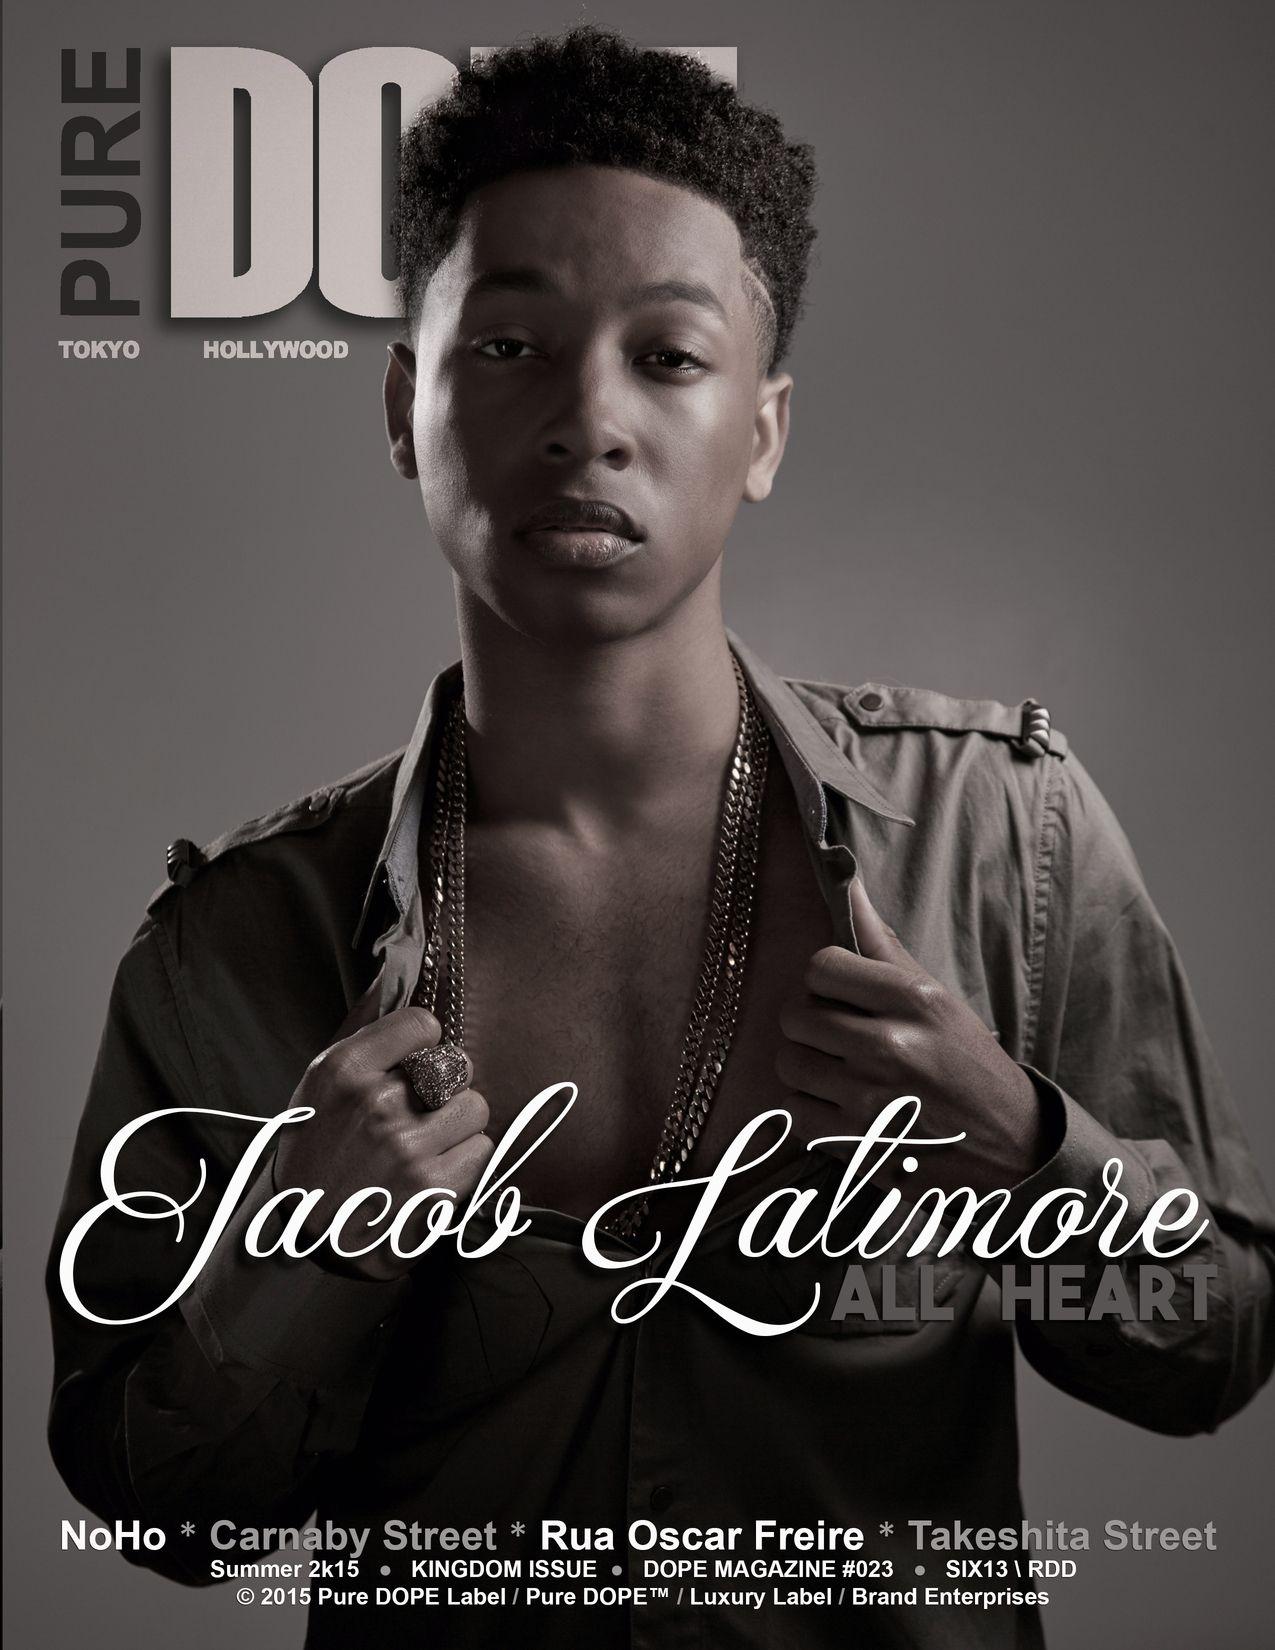 Actor Singer Jacob Latimore Covers Pure DOPE Magazine's Summer